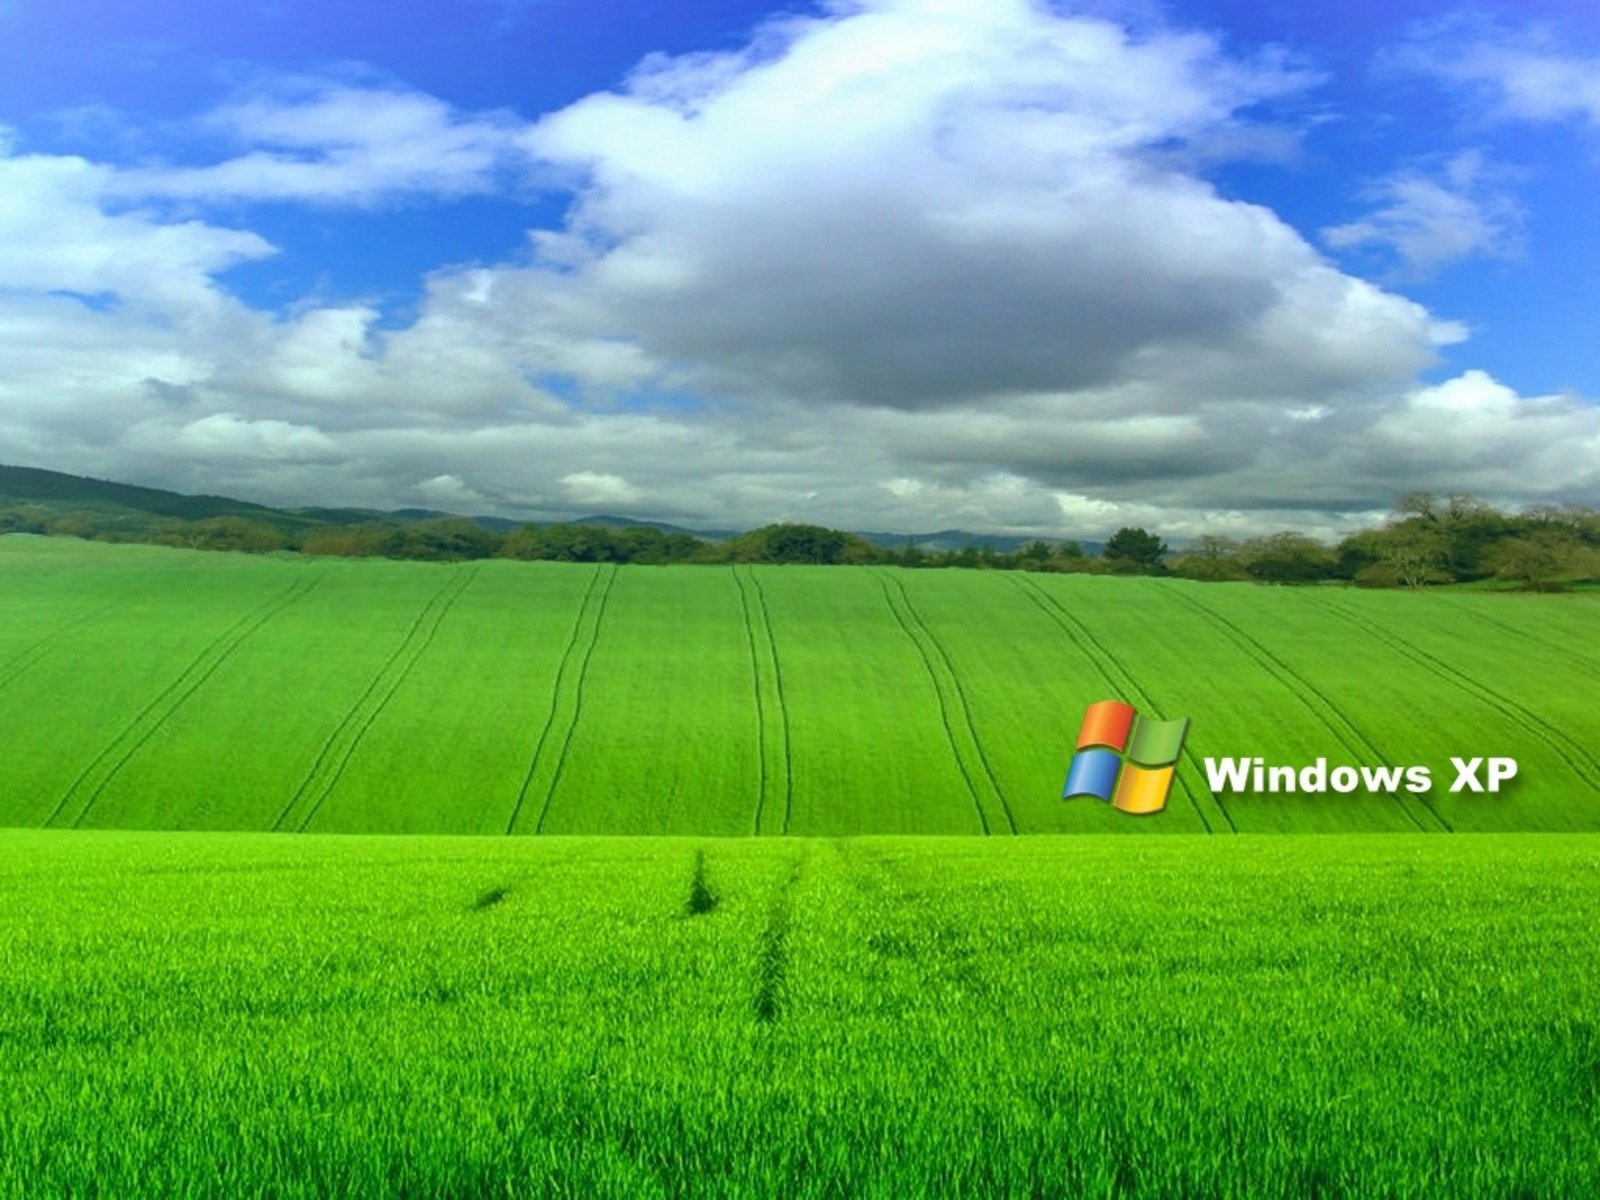 HD Windows Xp Wallpaper For